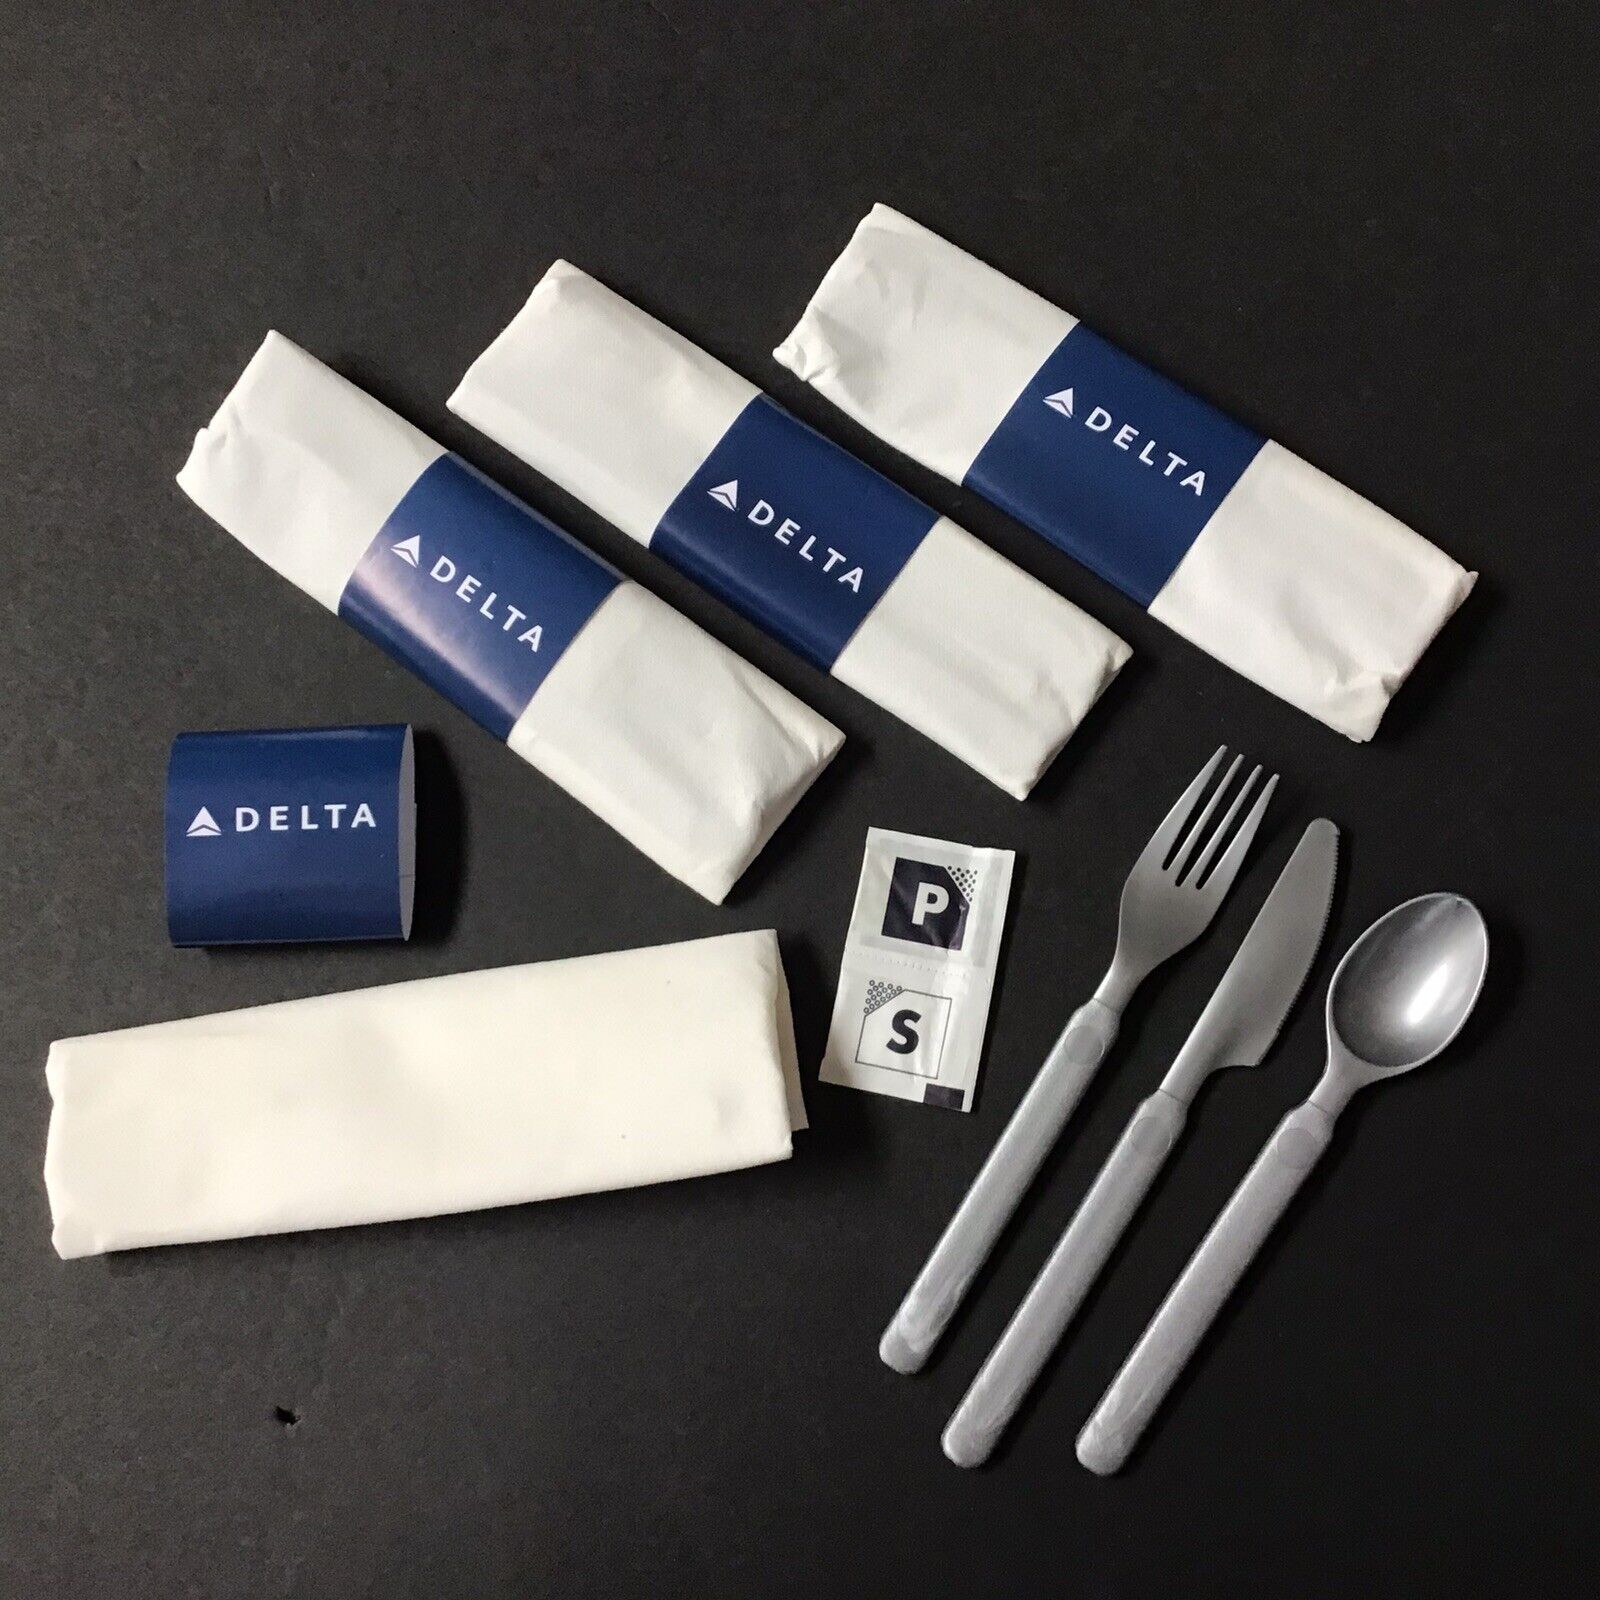 Delta Air Lines Inflight Cutlery Set - Set of 4 - Cabin Service Silverware